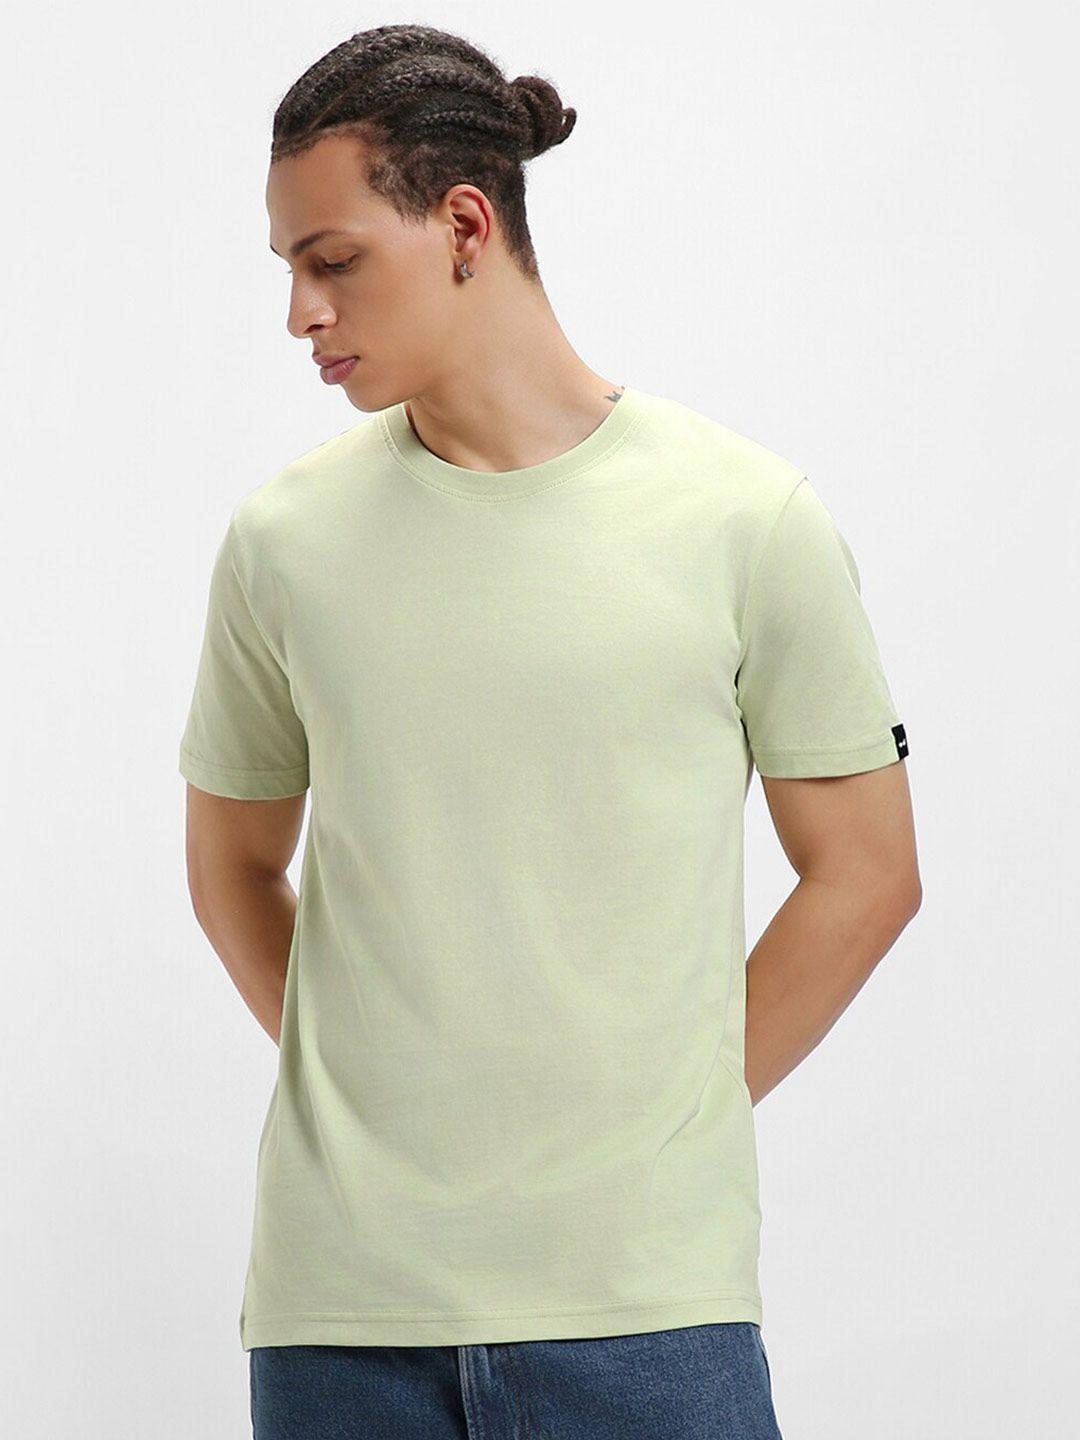 bewakoof green round neck short sleeves pure cotton regular t-shirt